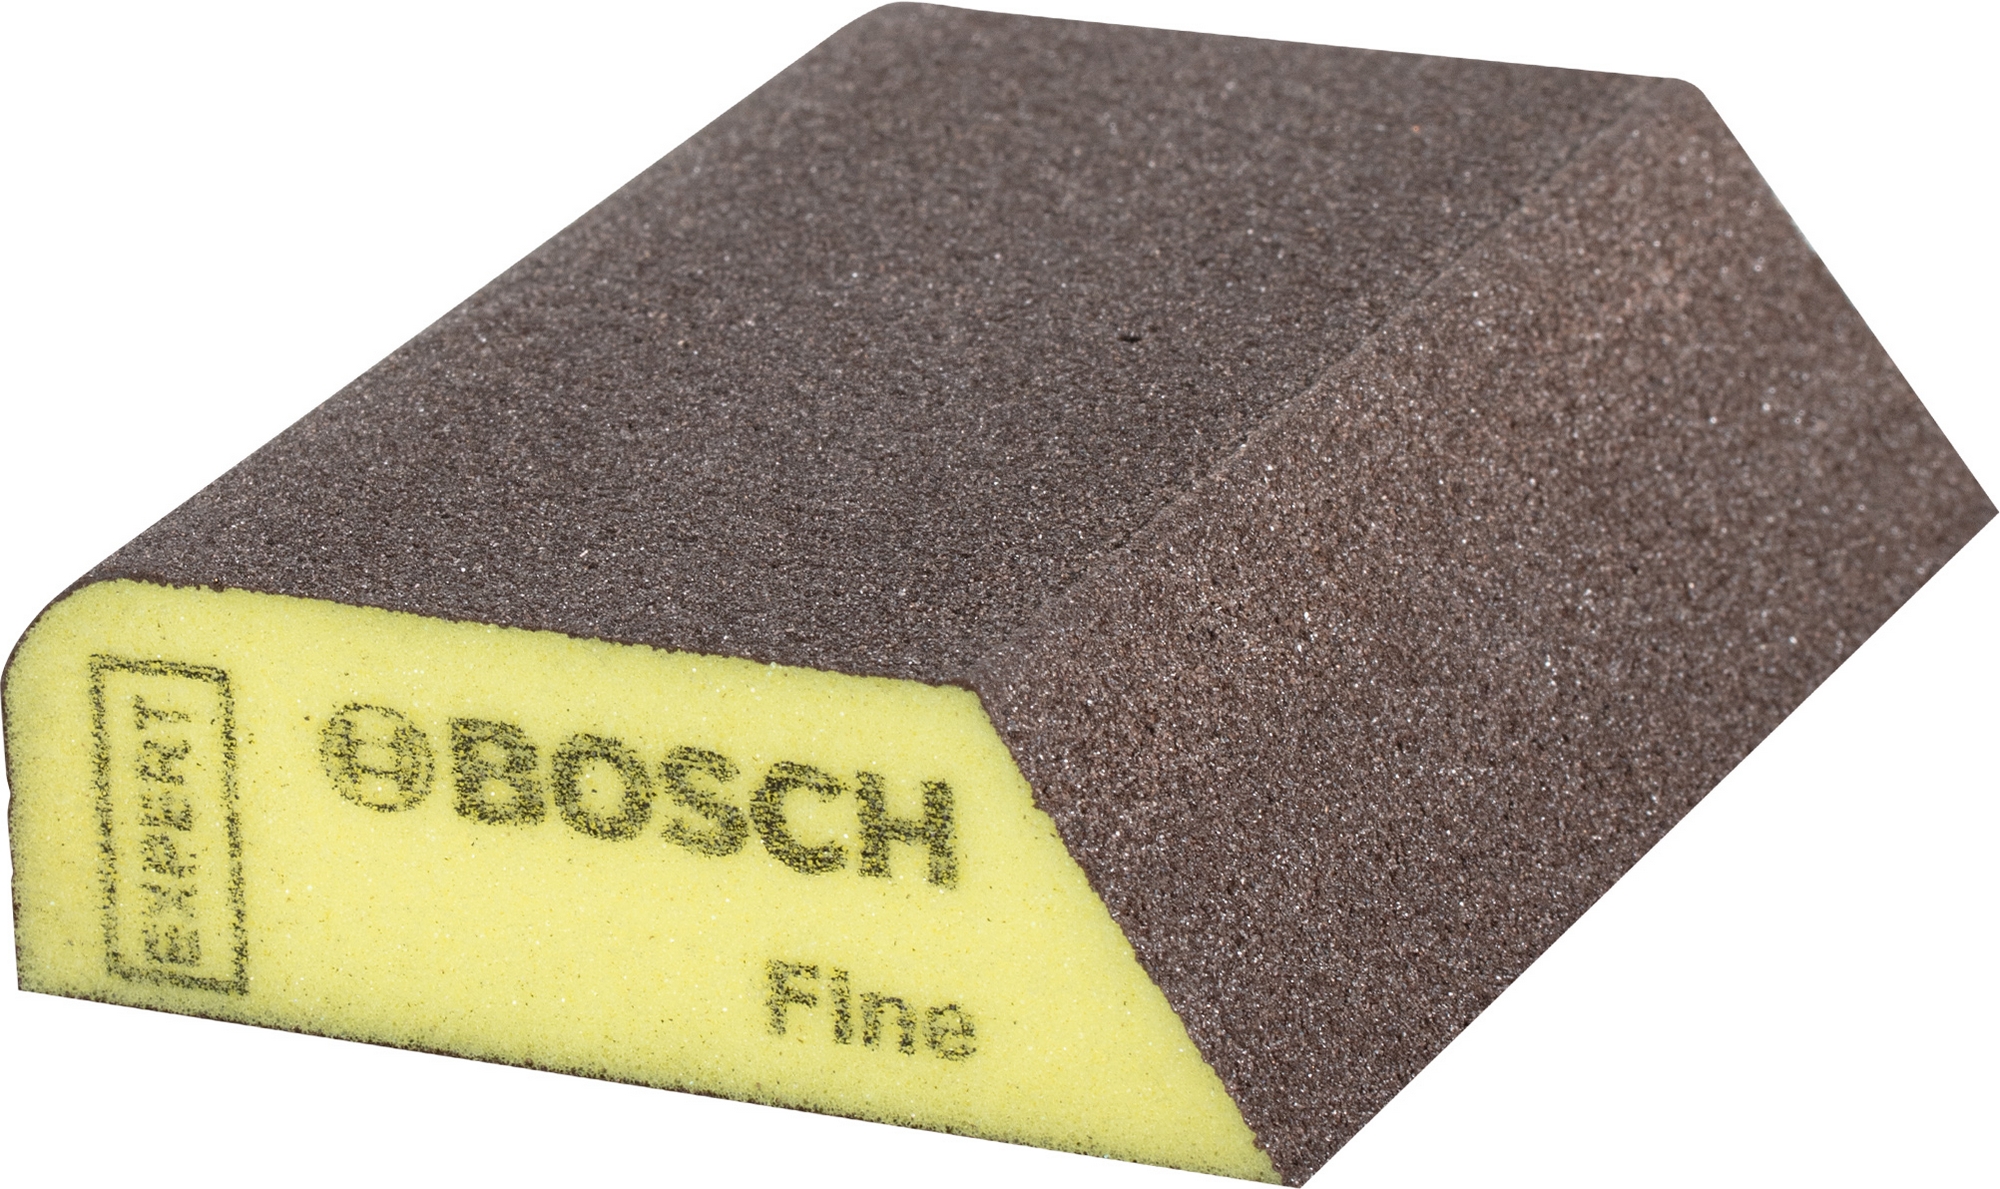 Houba brusná Bosch Expert S470 69×26×97 mm jemná